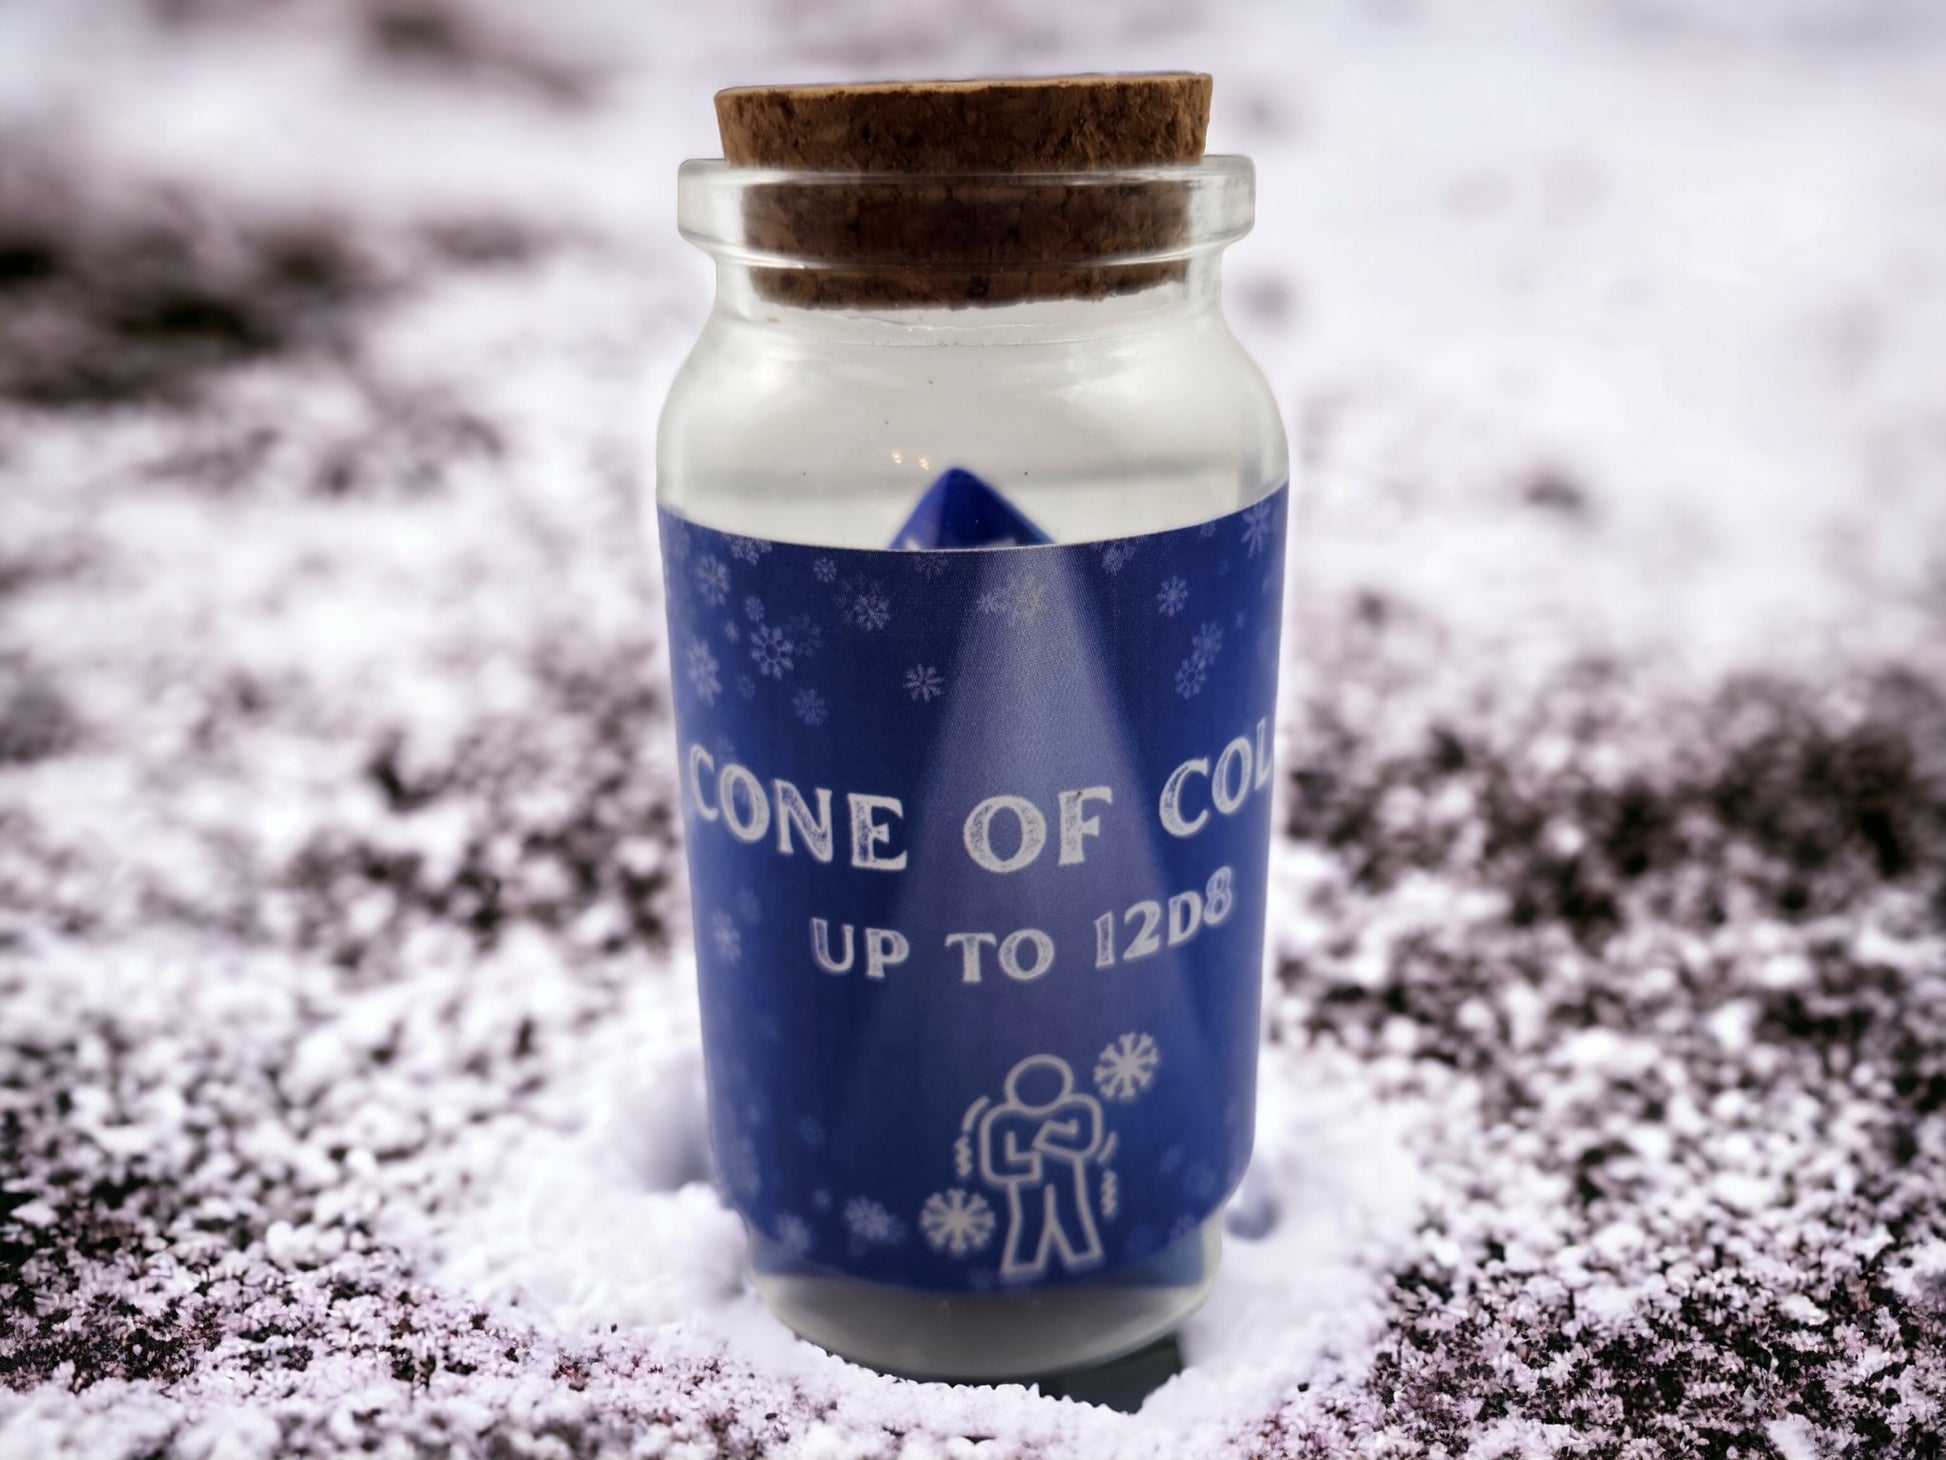 Cone of Cold spell dice jar - Rowan Gate